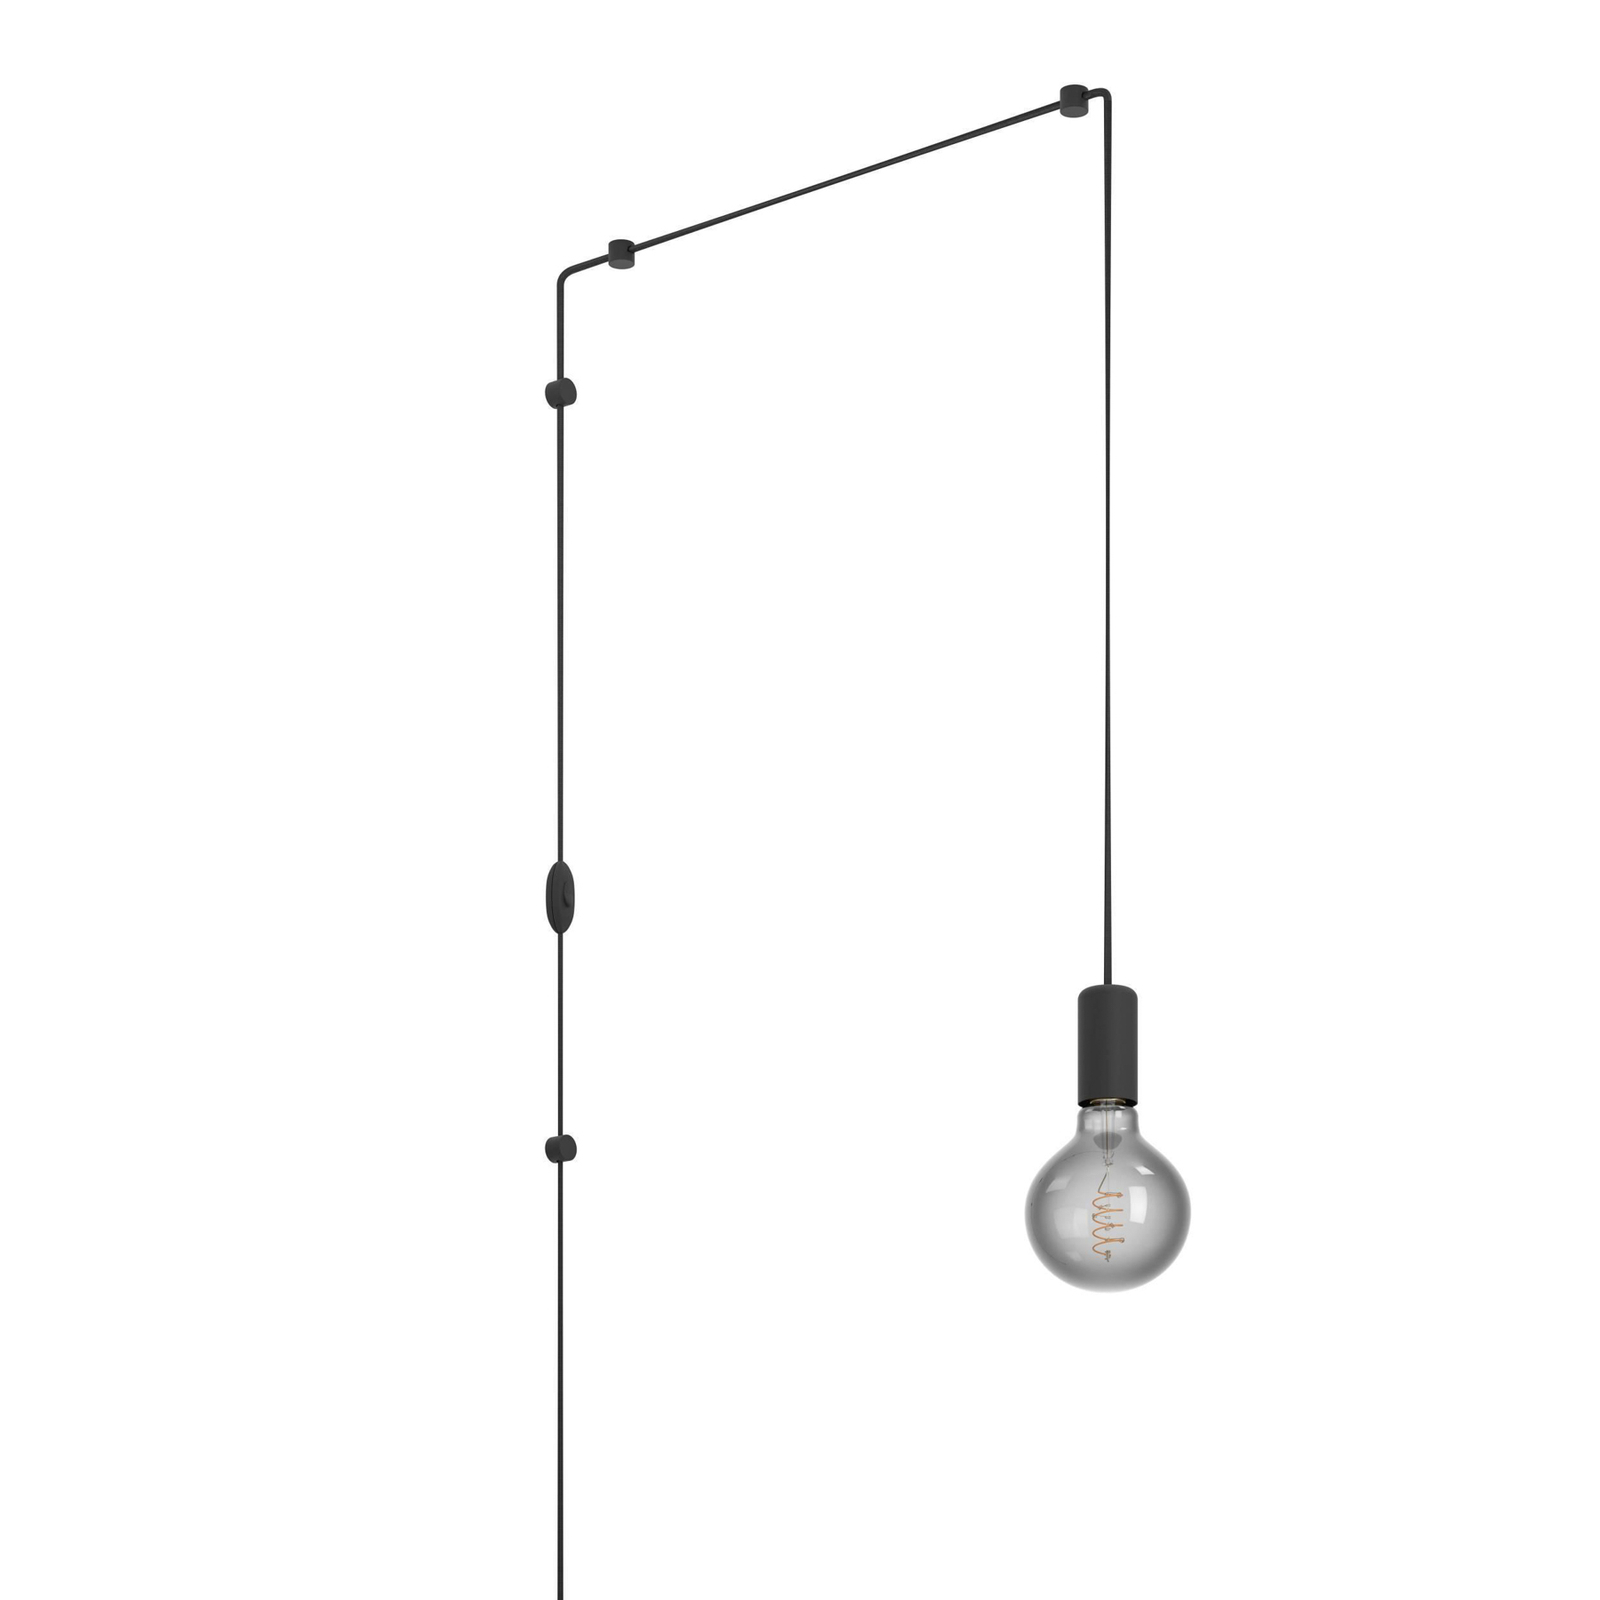 Viseća lampa Pinetina, projekcija 40 cm, crna, utikač